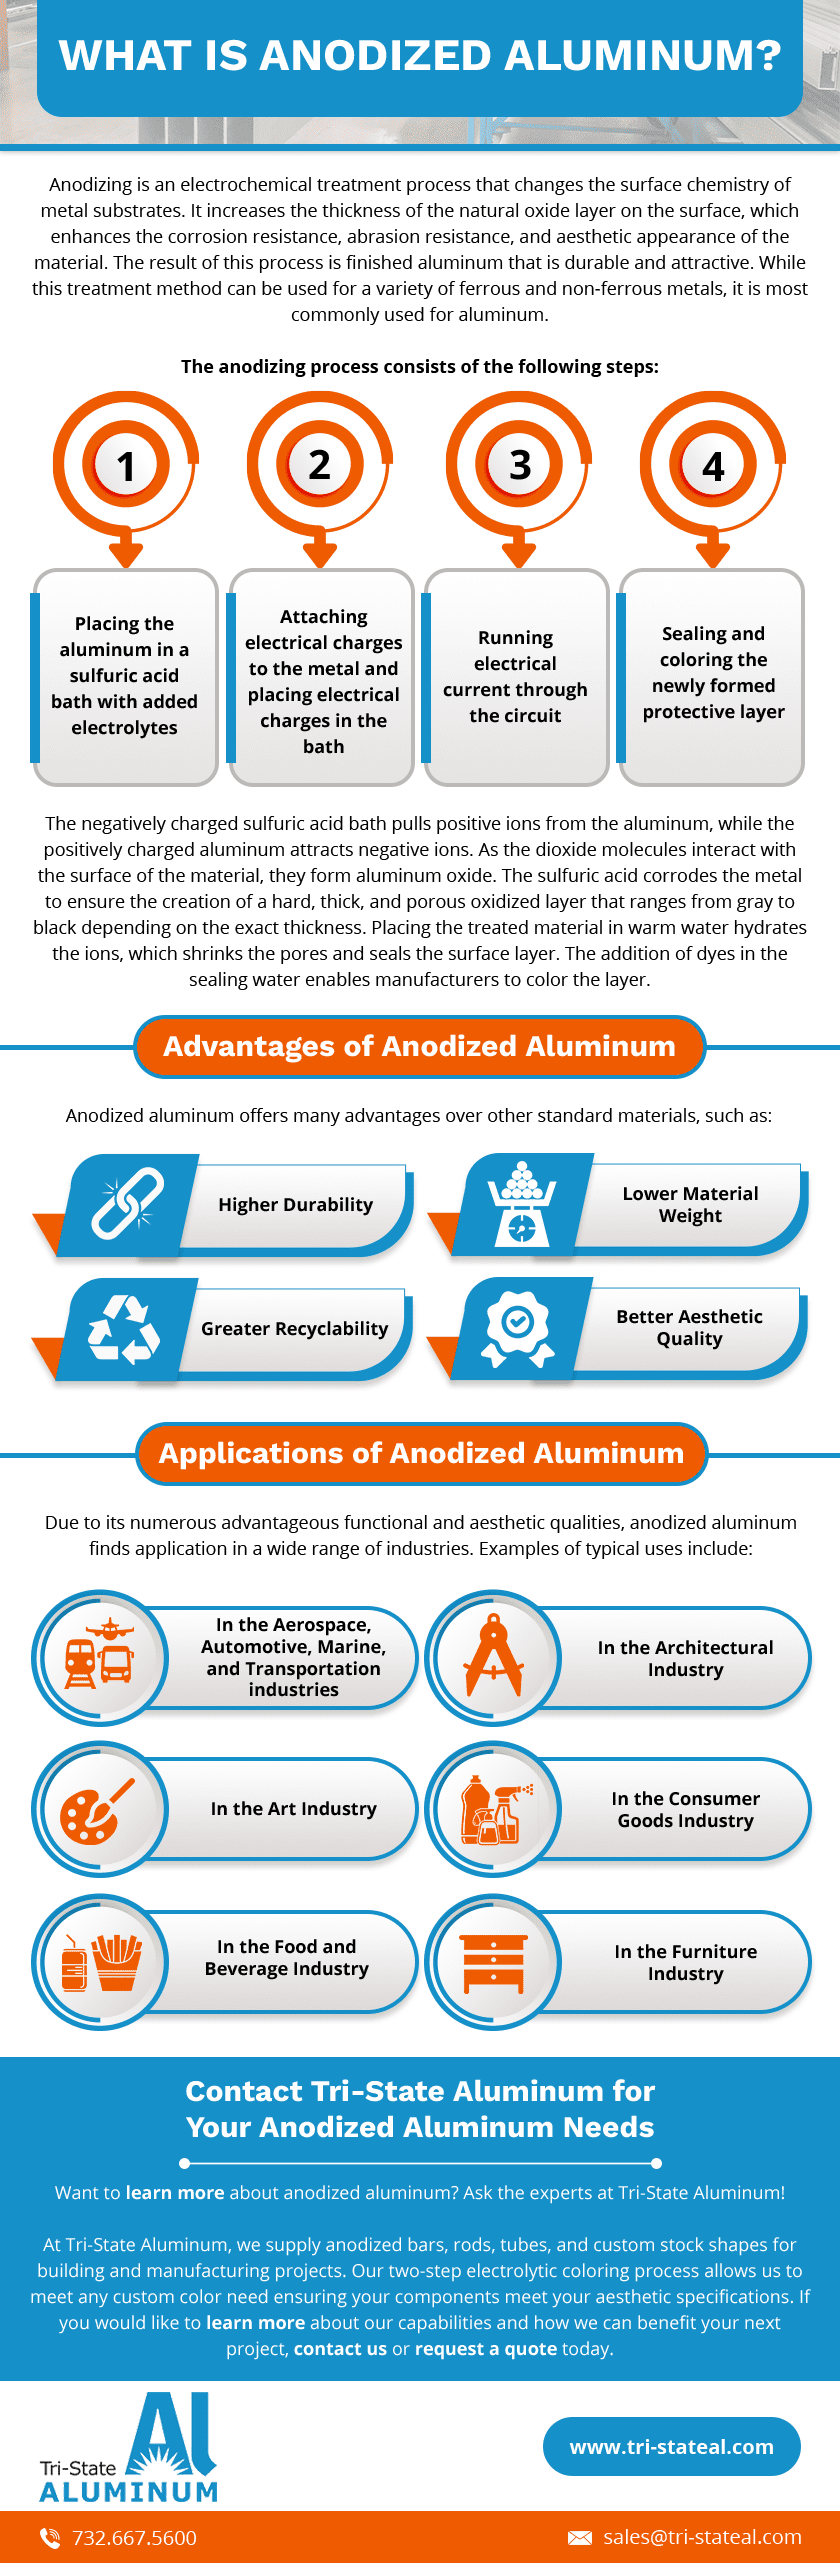 What is Anodized Alumininum